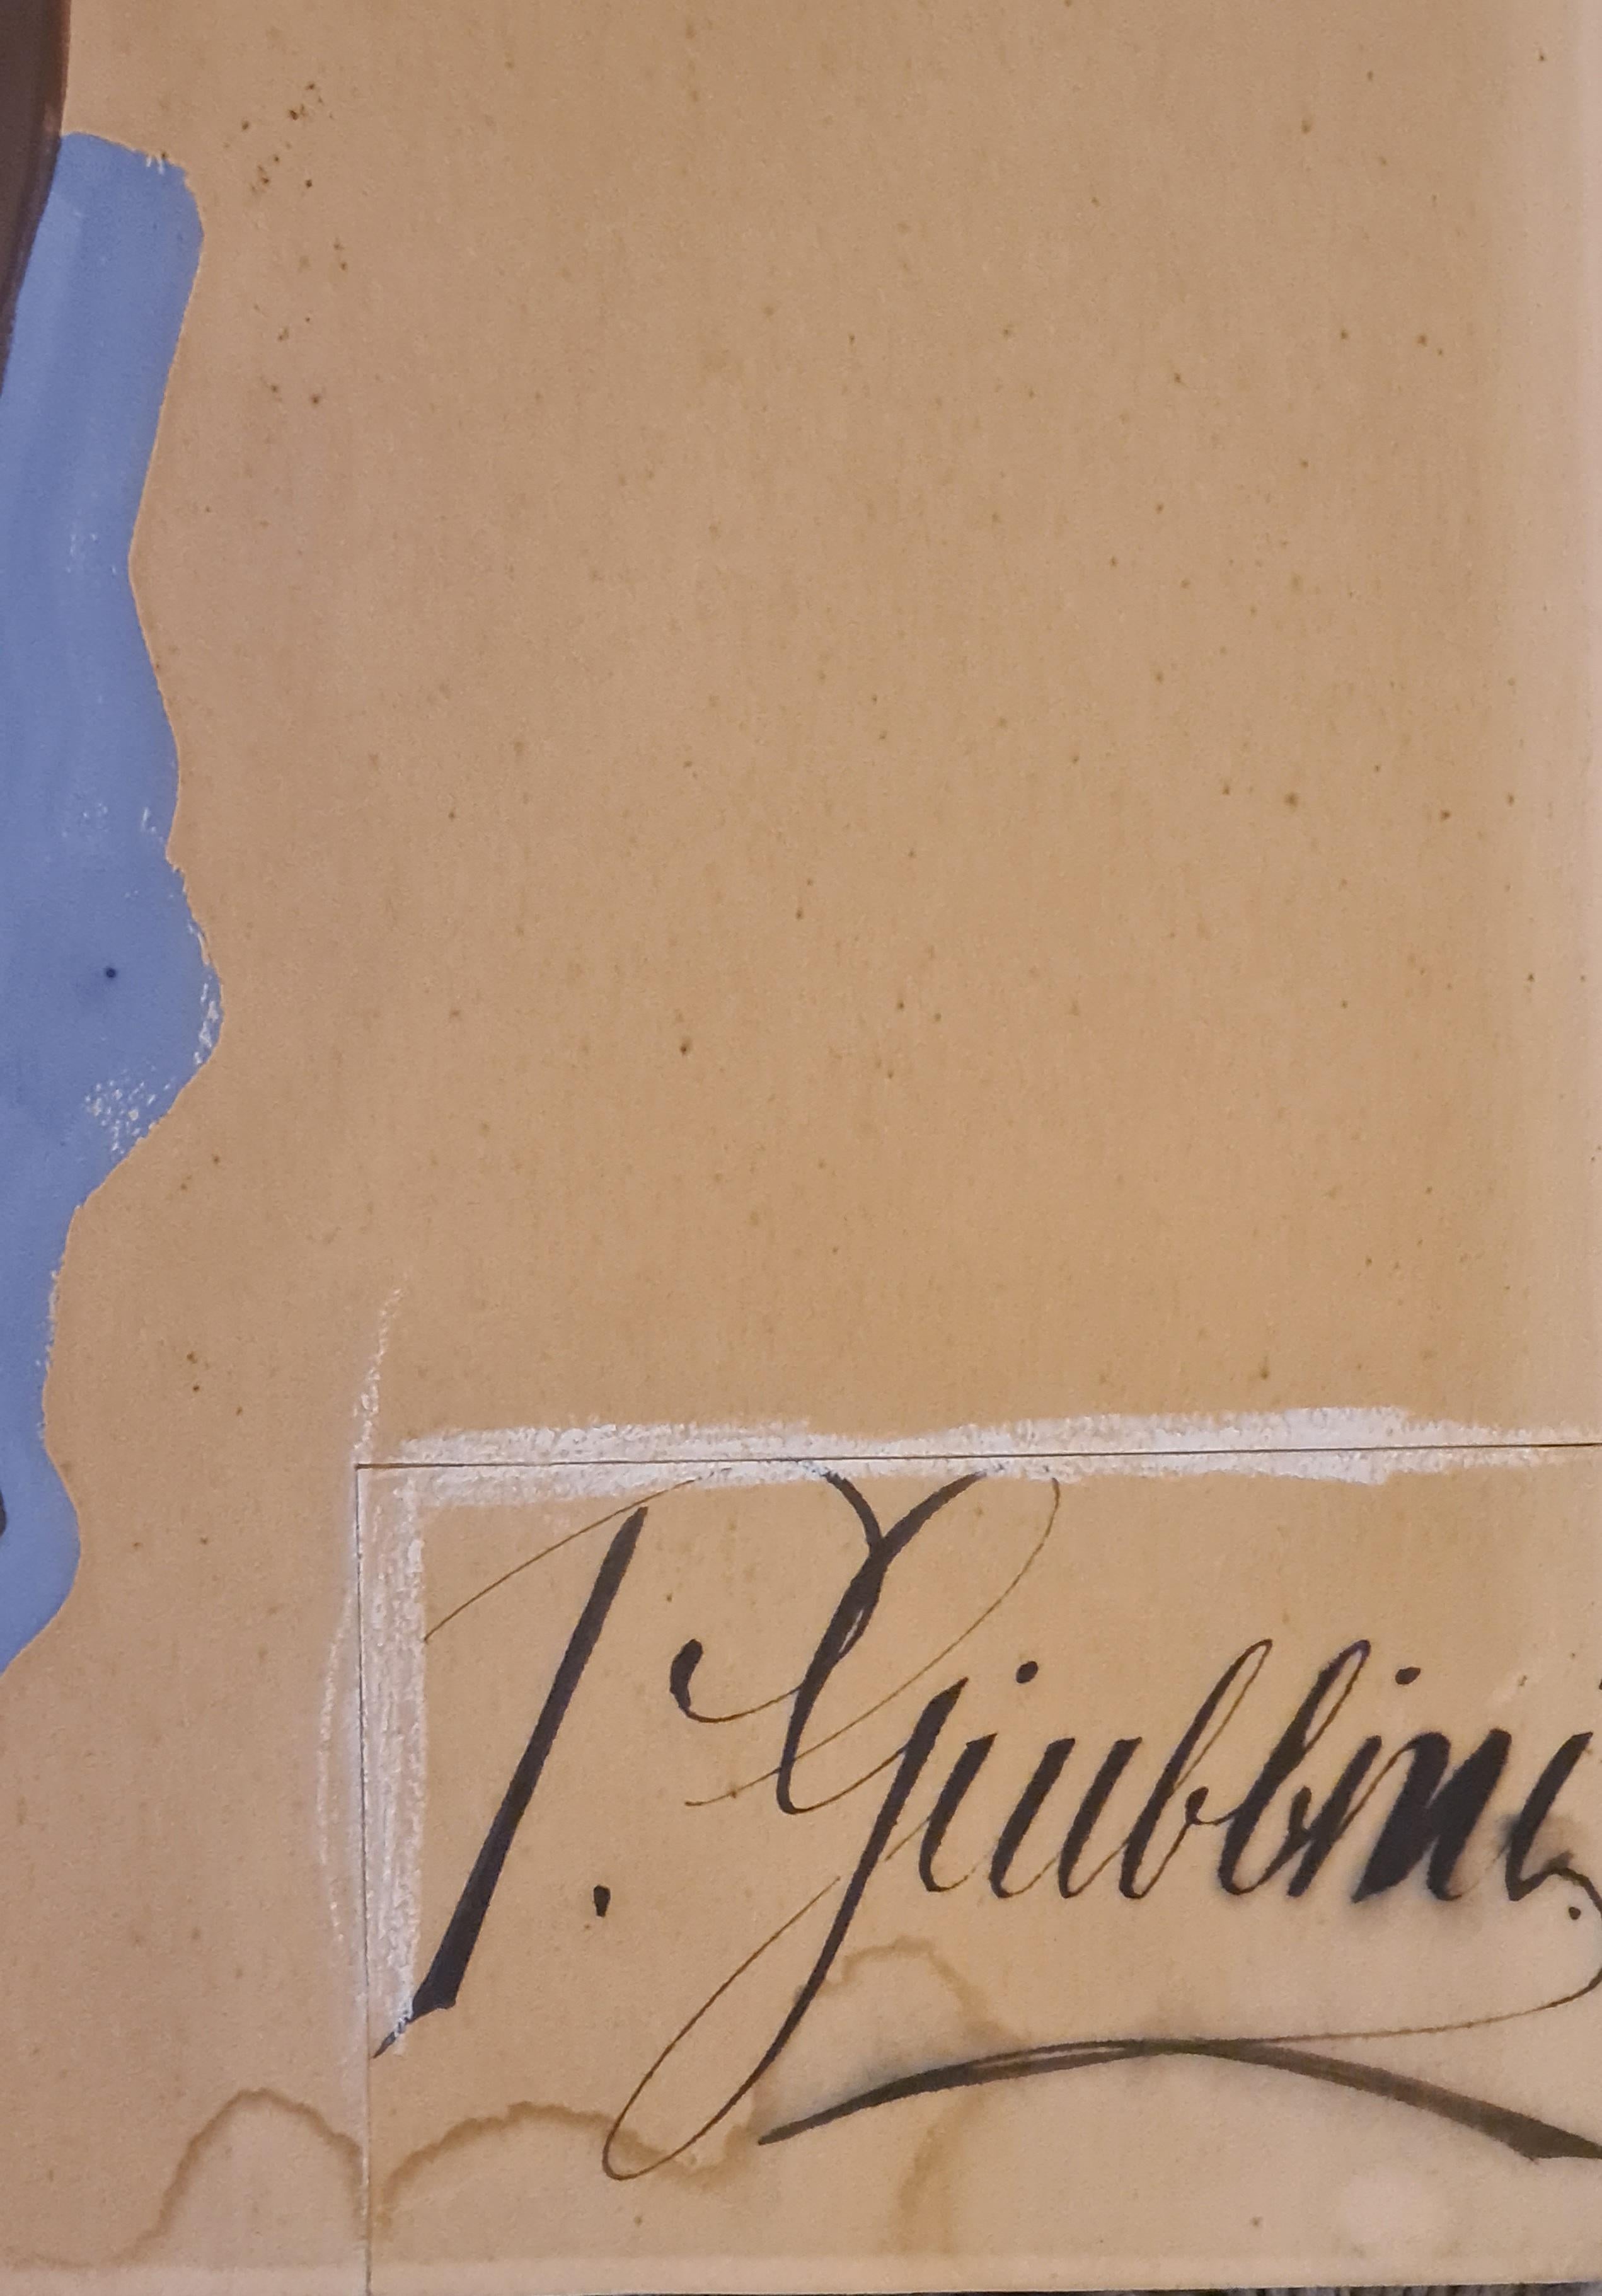 Englischer Windhund, Art Deco Gouache Portrait on Paper. - Brown Portrait Painting by P Giubbini